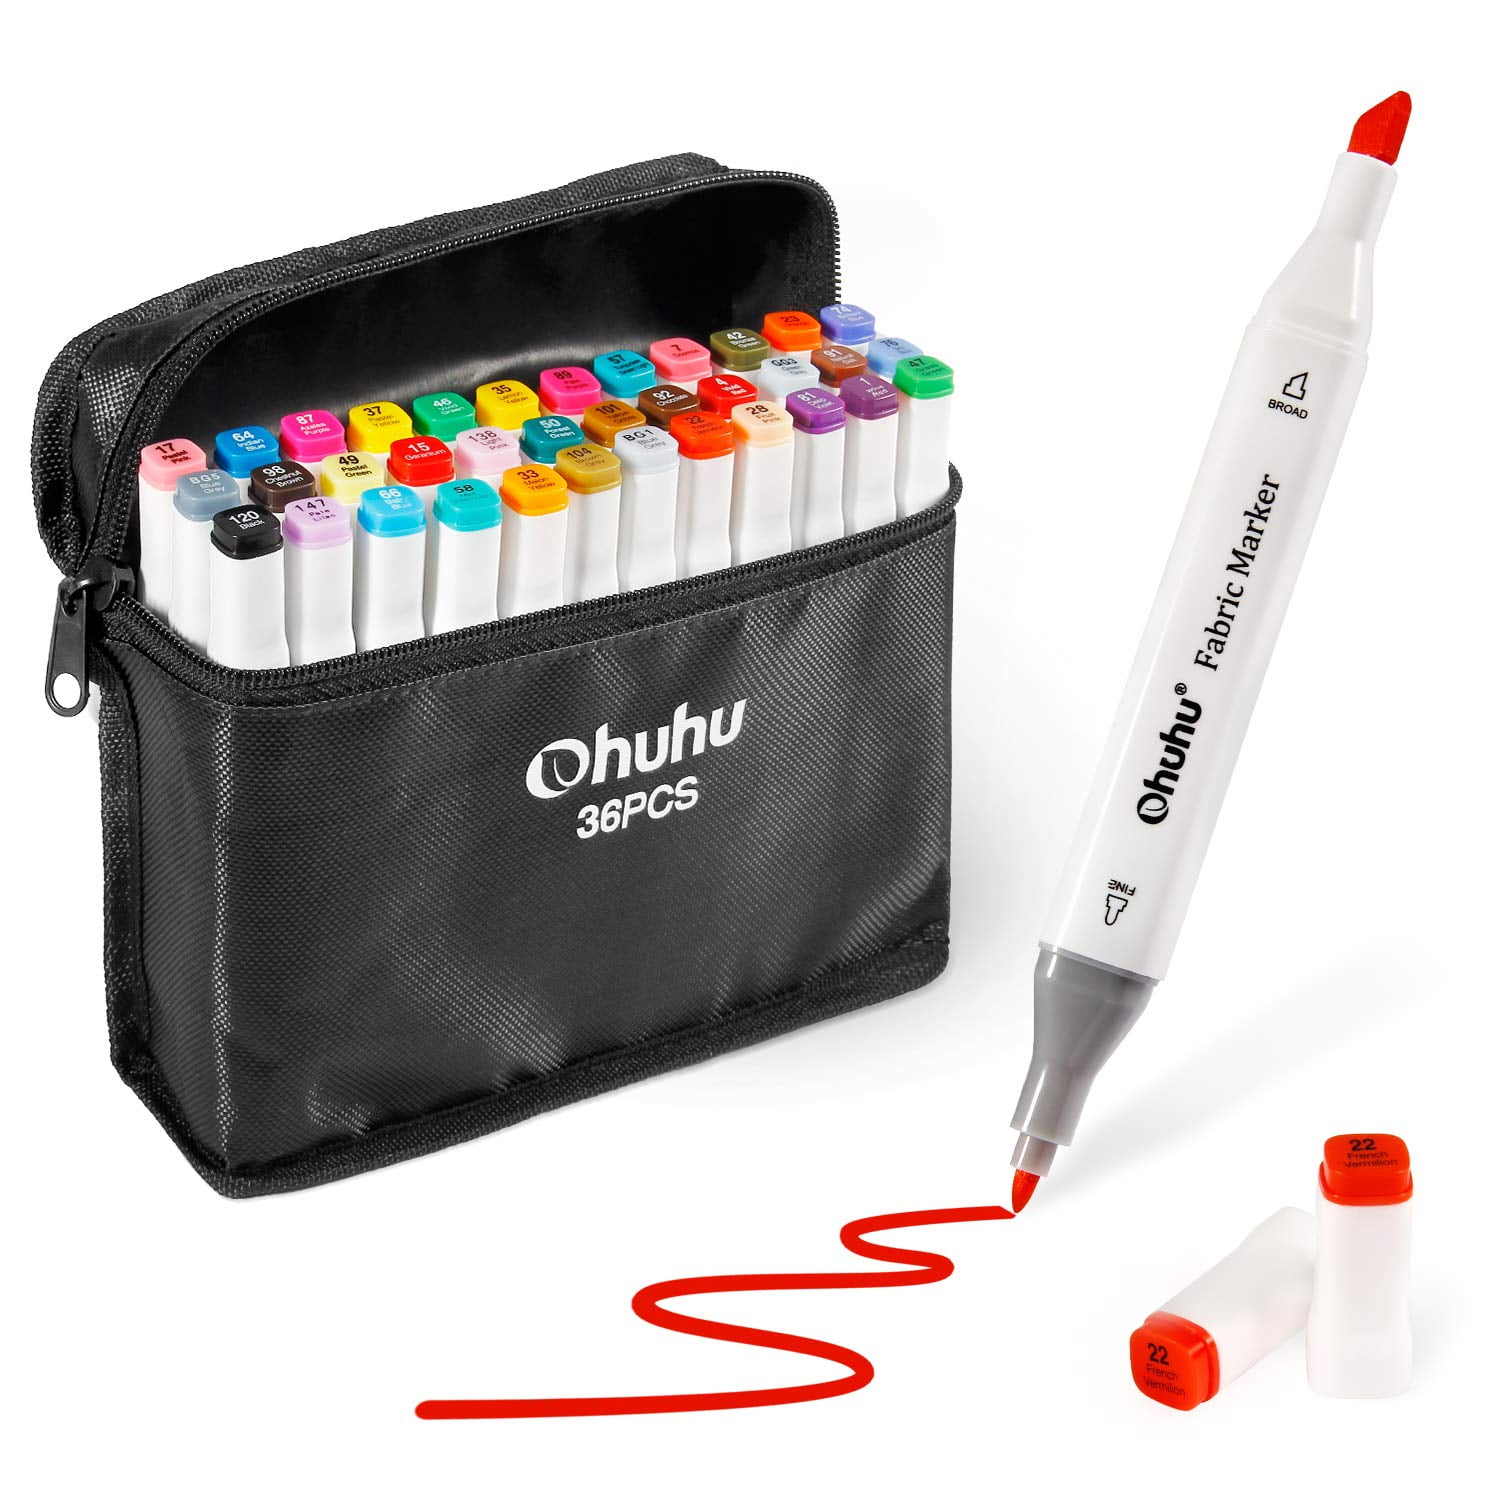 Or Make-Up Bag Black Canvas School Pencil Case Gift, Little Mix 